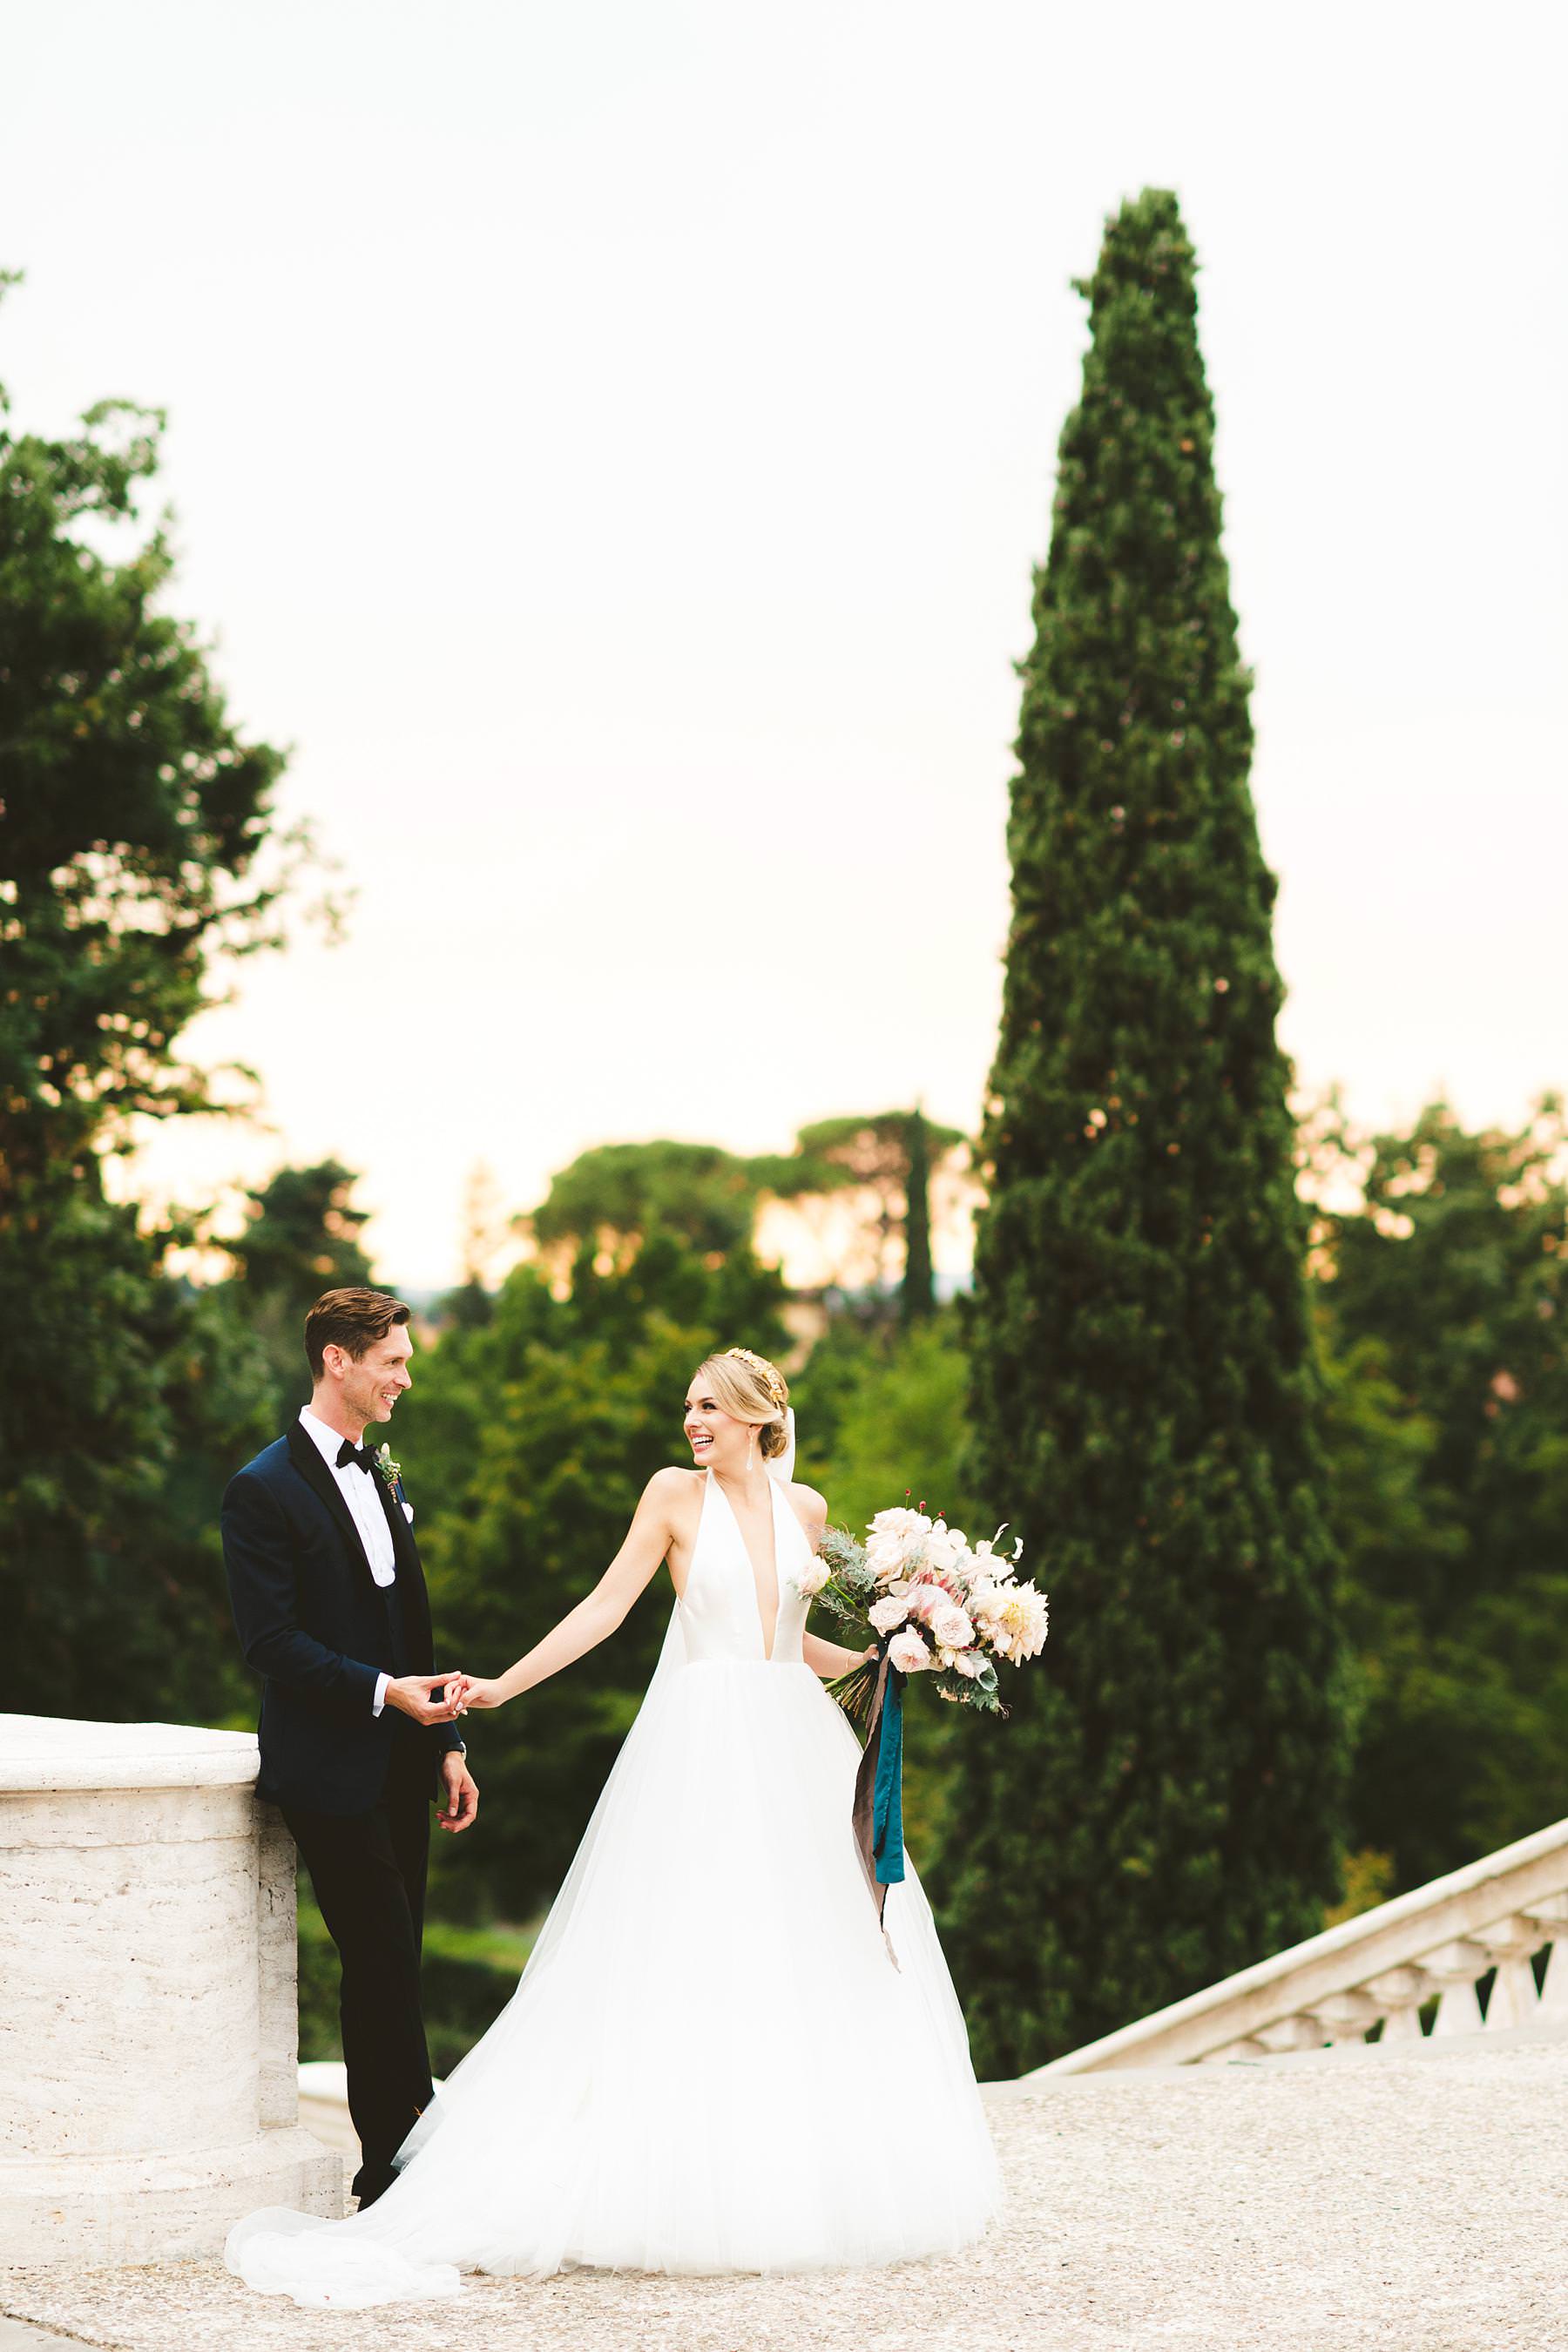 Bride and groom elegant portrait in Florence at San Miniato area. Luxury intimate destination wedding at Villa La Vedetta